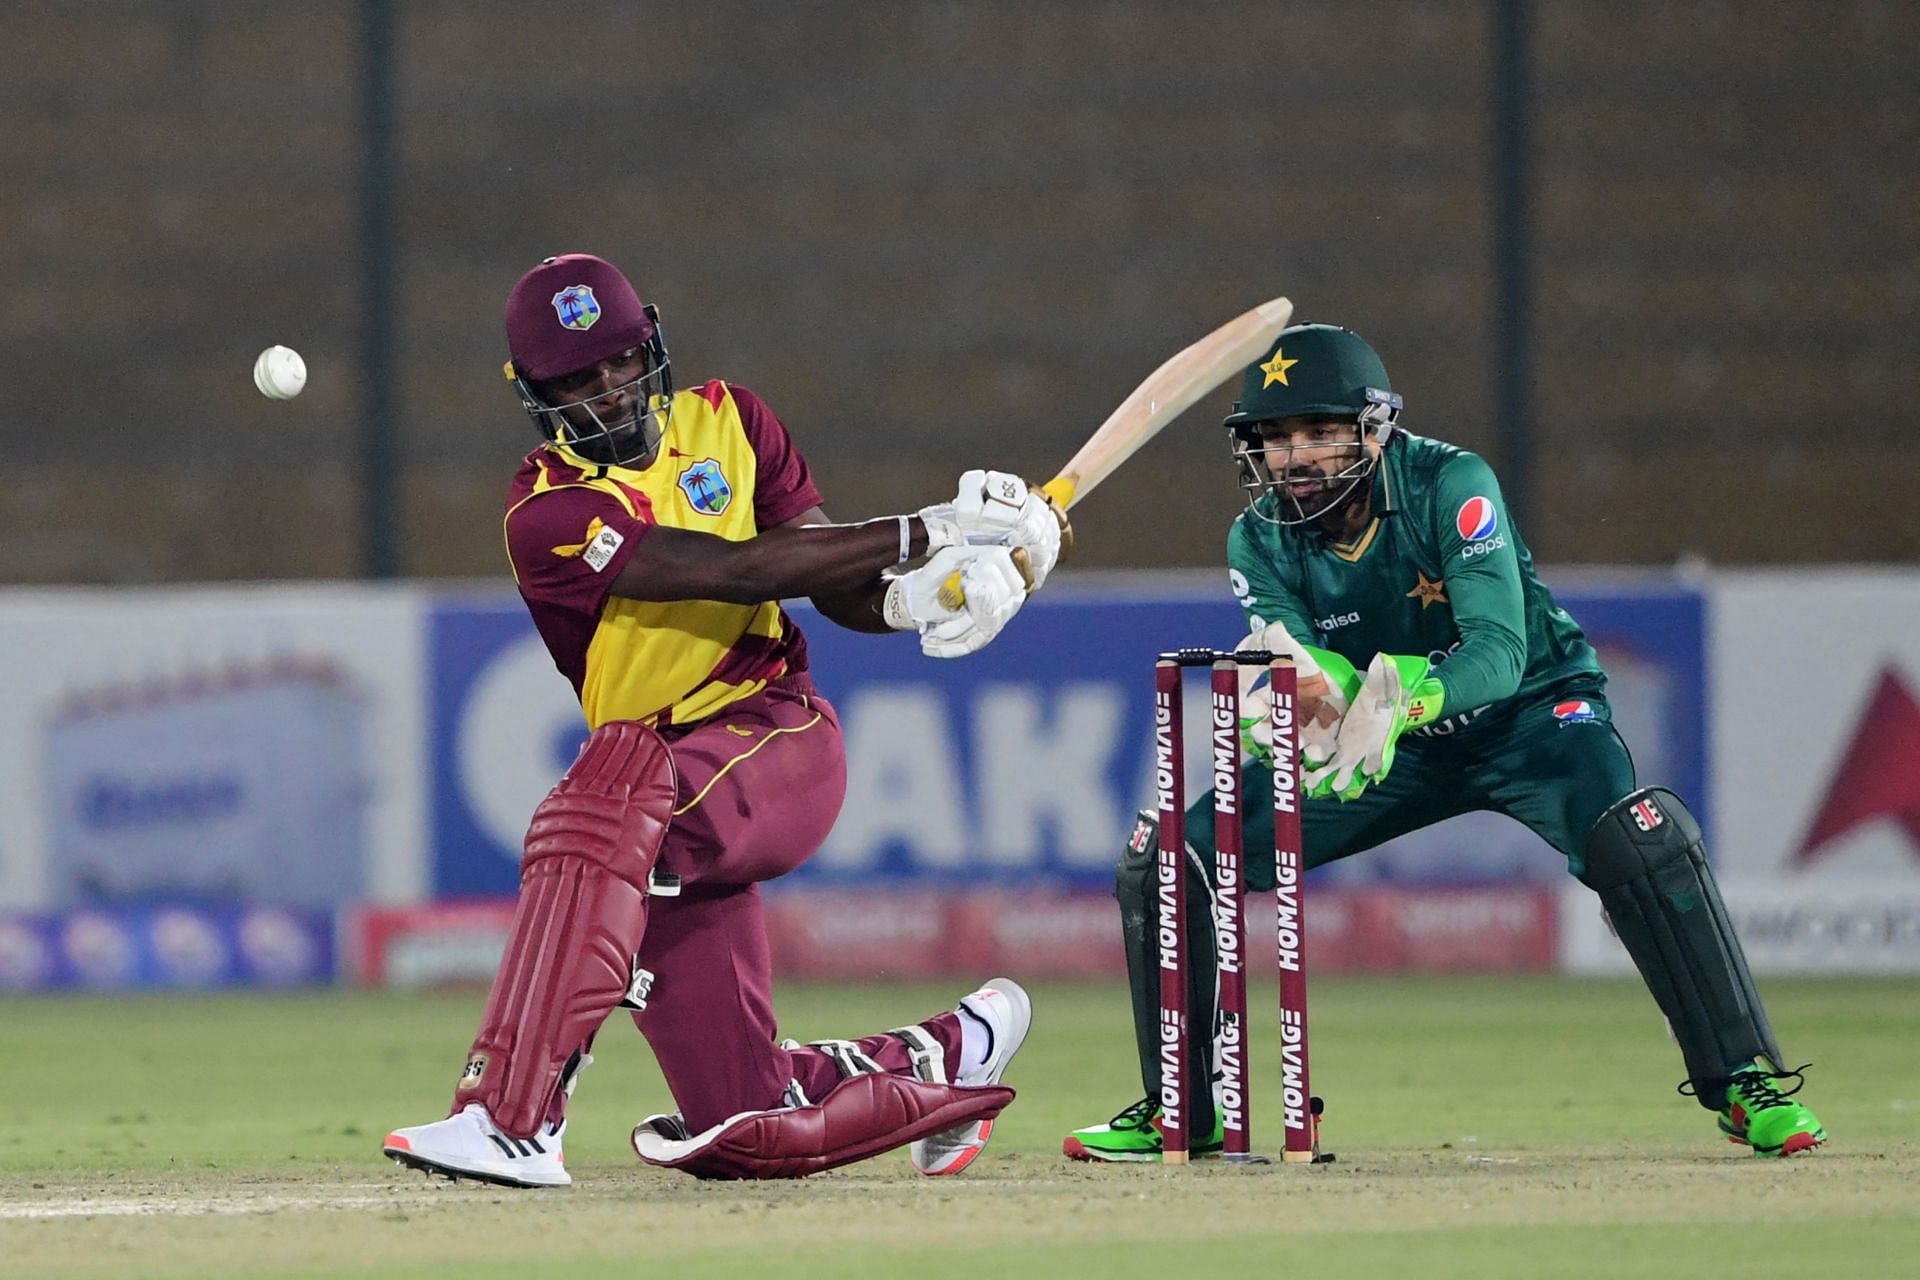 Pakistan-West Indies ODI series moved from Rawalpindi to Multan.